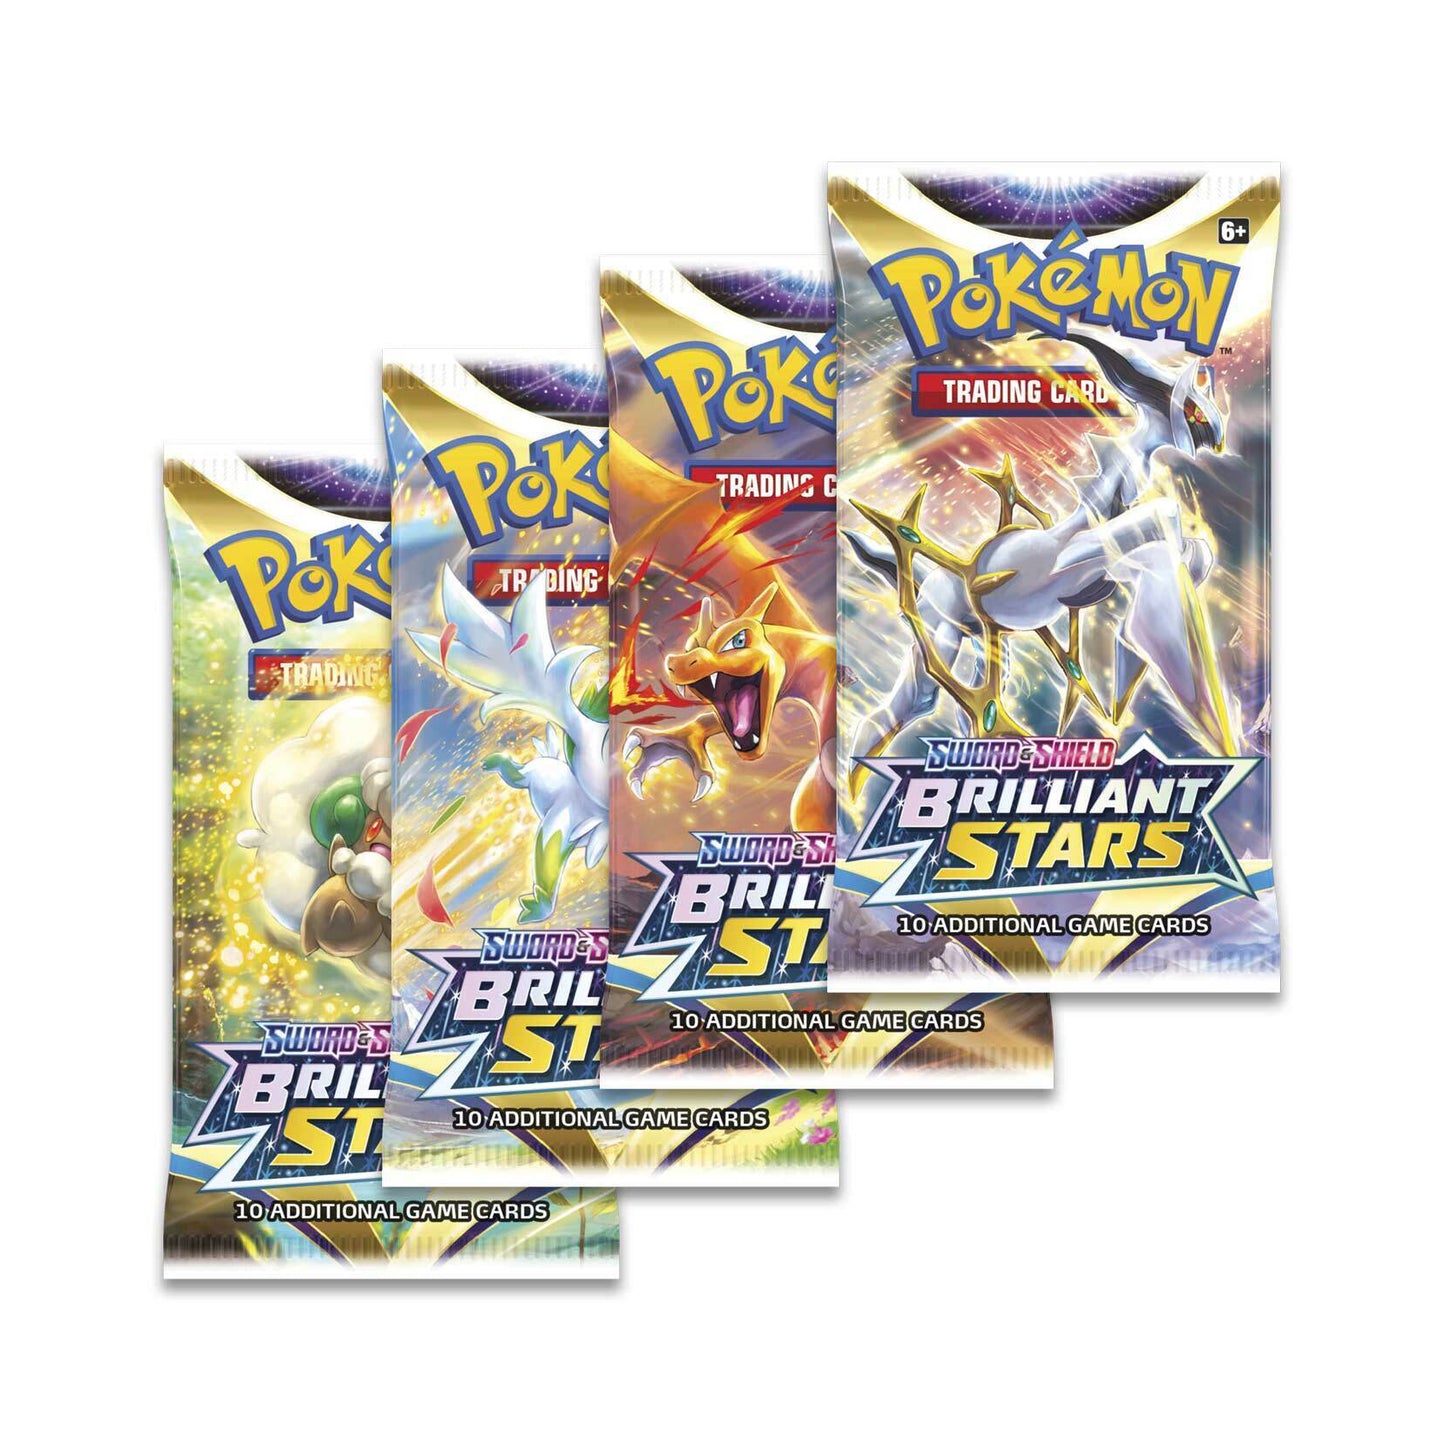 Pokémon TCG: Sword & Shield Brilliant Stars Single Booster Pack